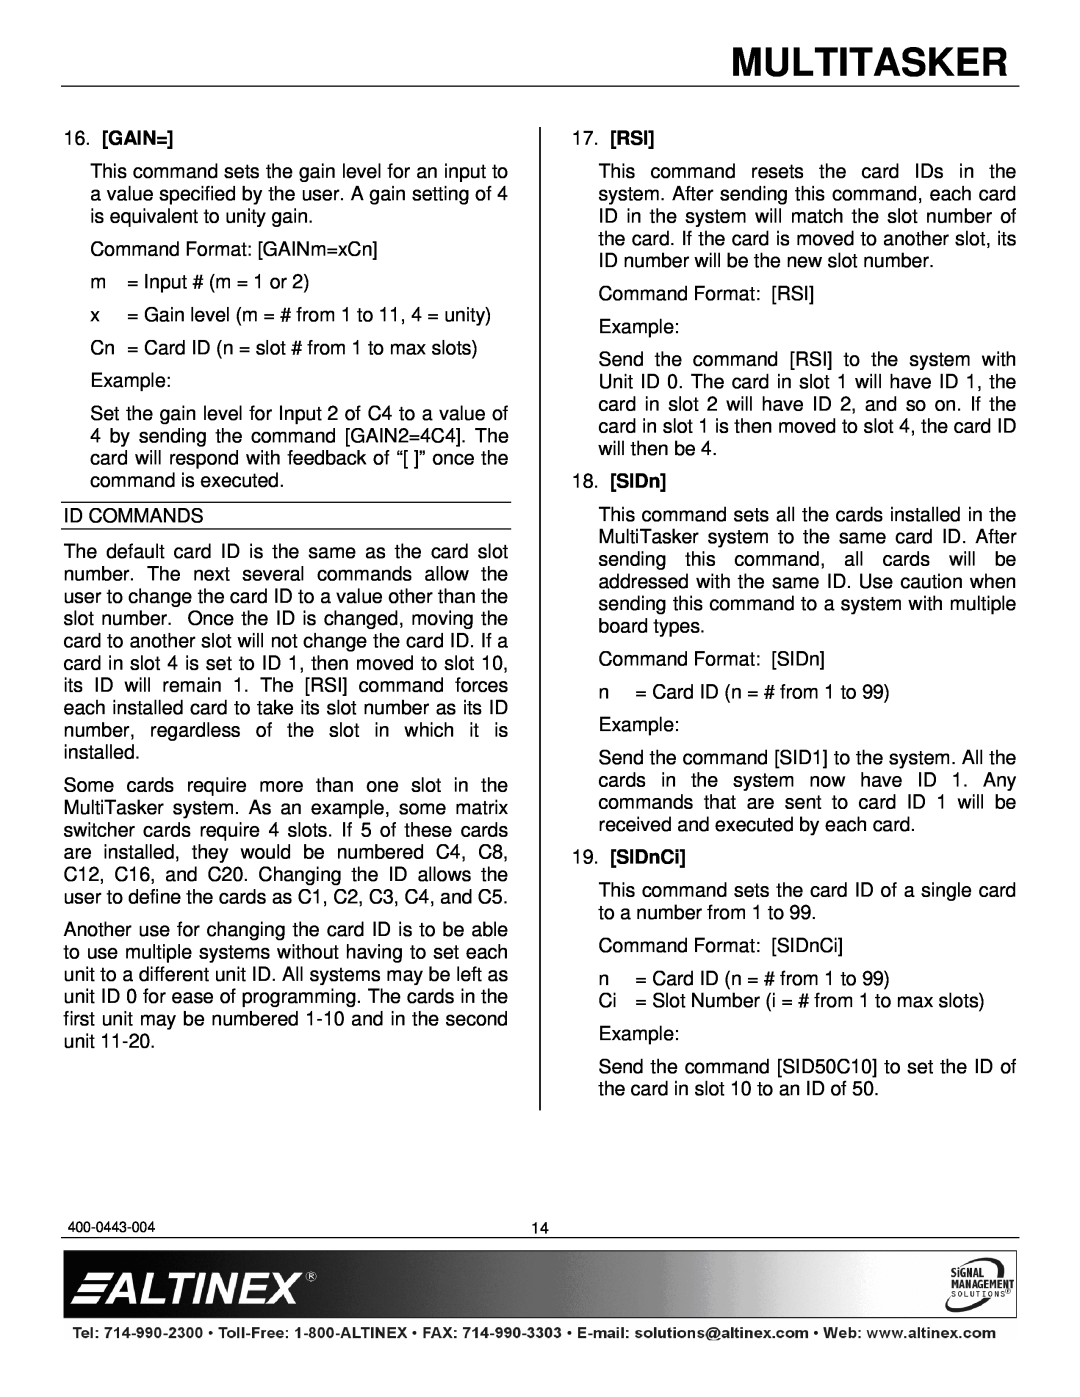 Altinex MT115-111 manual Multitasker, Gain=, 17.RSI, SIDnCi 